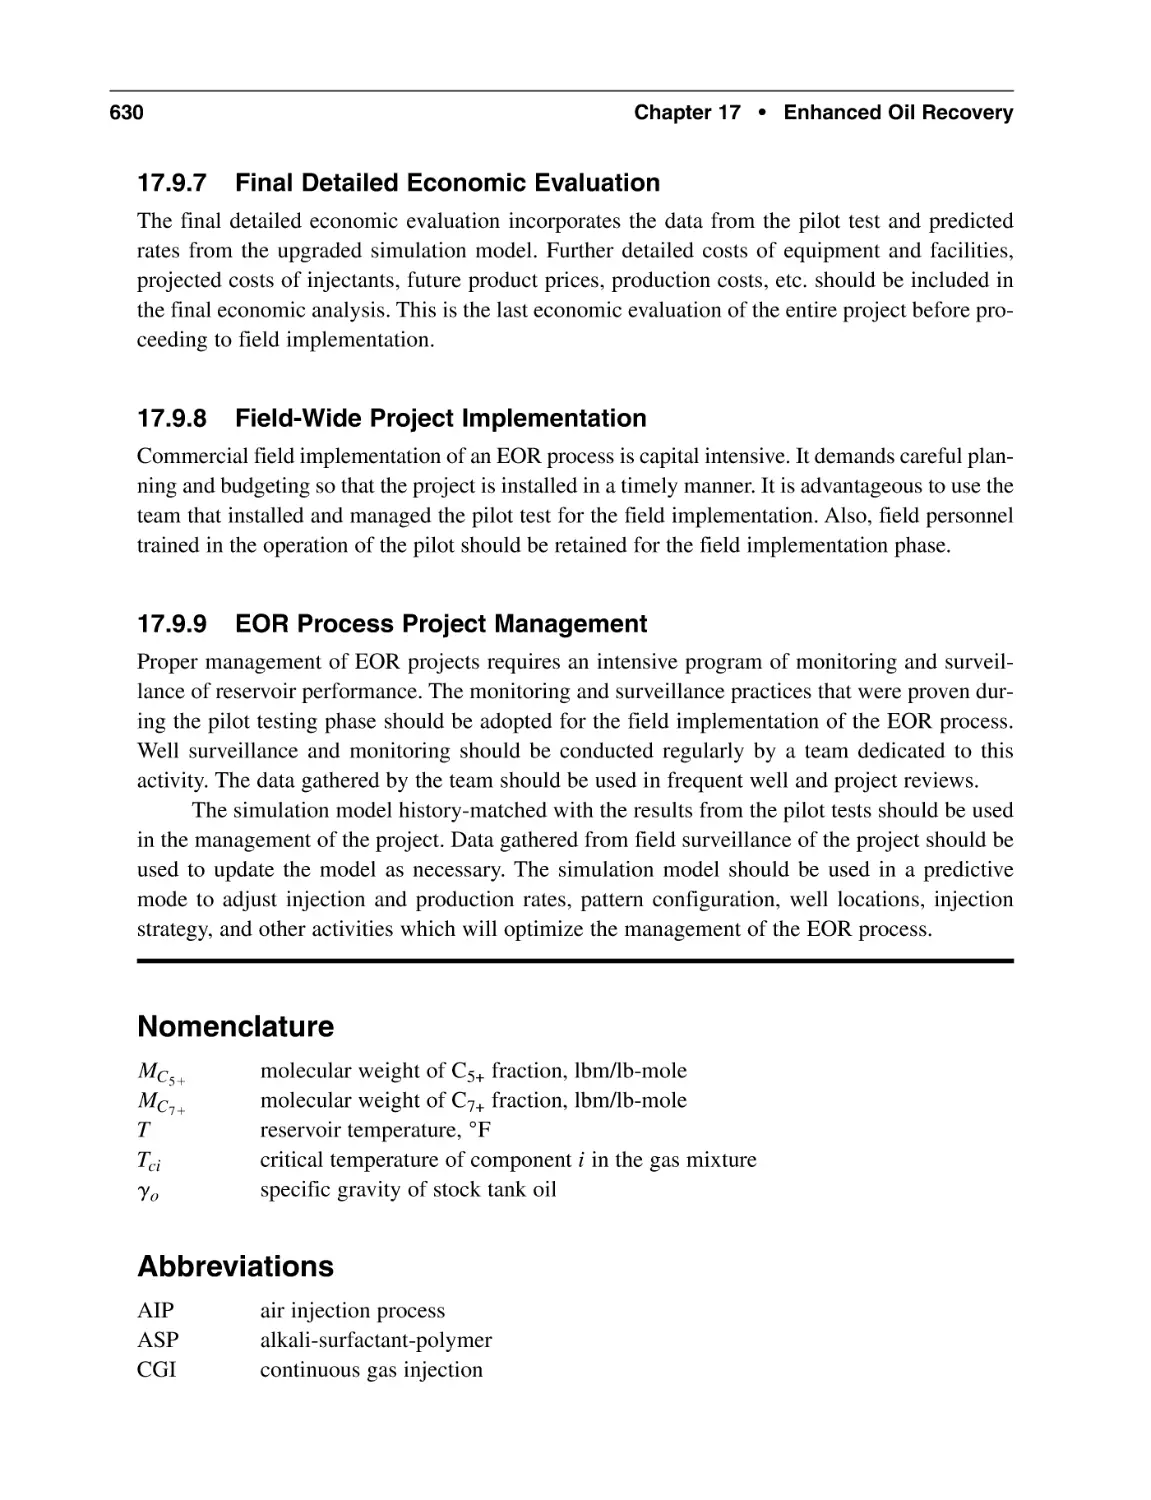 17.9.7 Final Detailed Economic Evaluation
17.9.8 Field-Wide Project Implementation
17.9.9 EOR Process Project Management
Nomenclature
Abbreviations